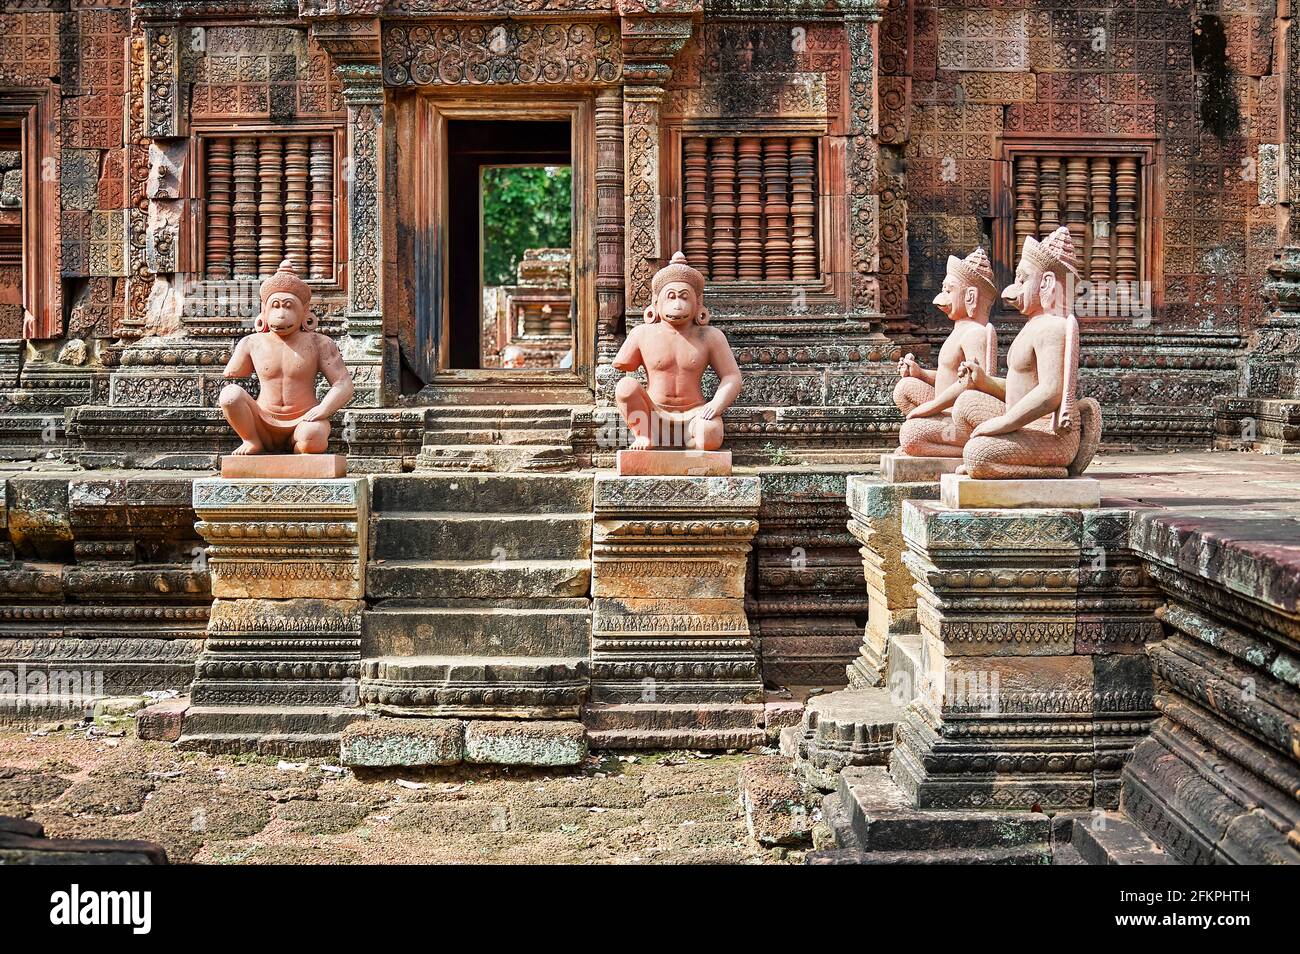 Cultura Khmer al tempio di Banteay Srei. Siem Reap Cambogia Foto Stock